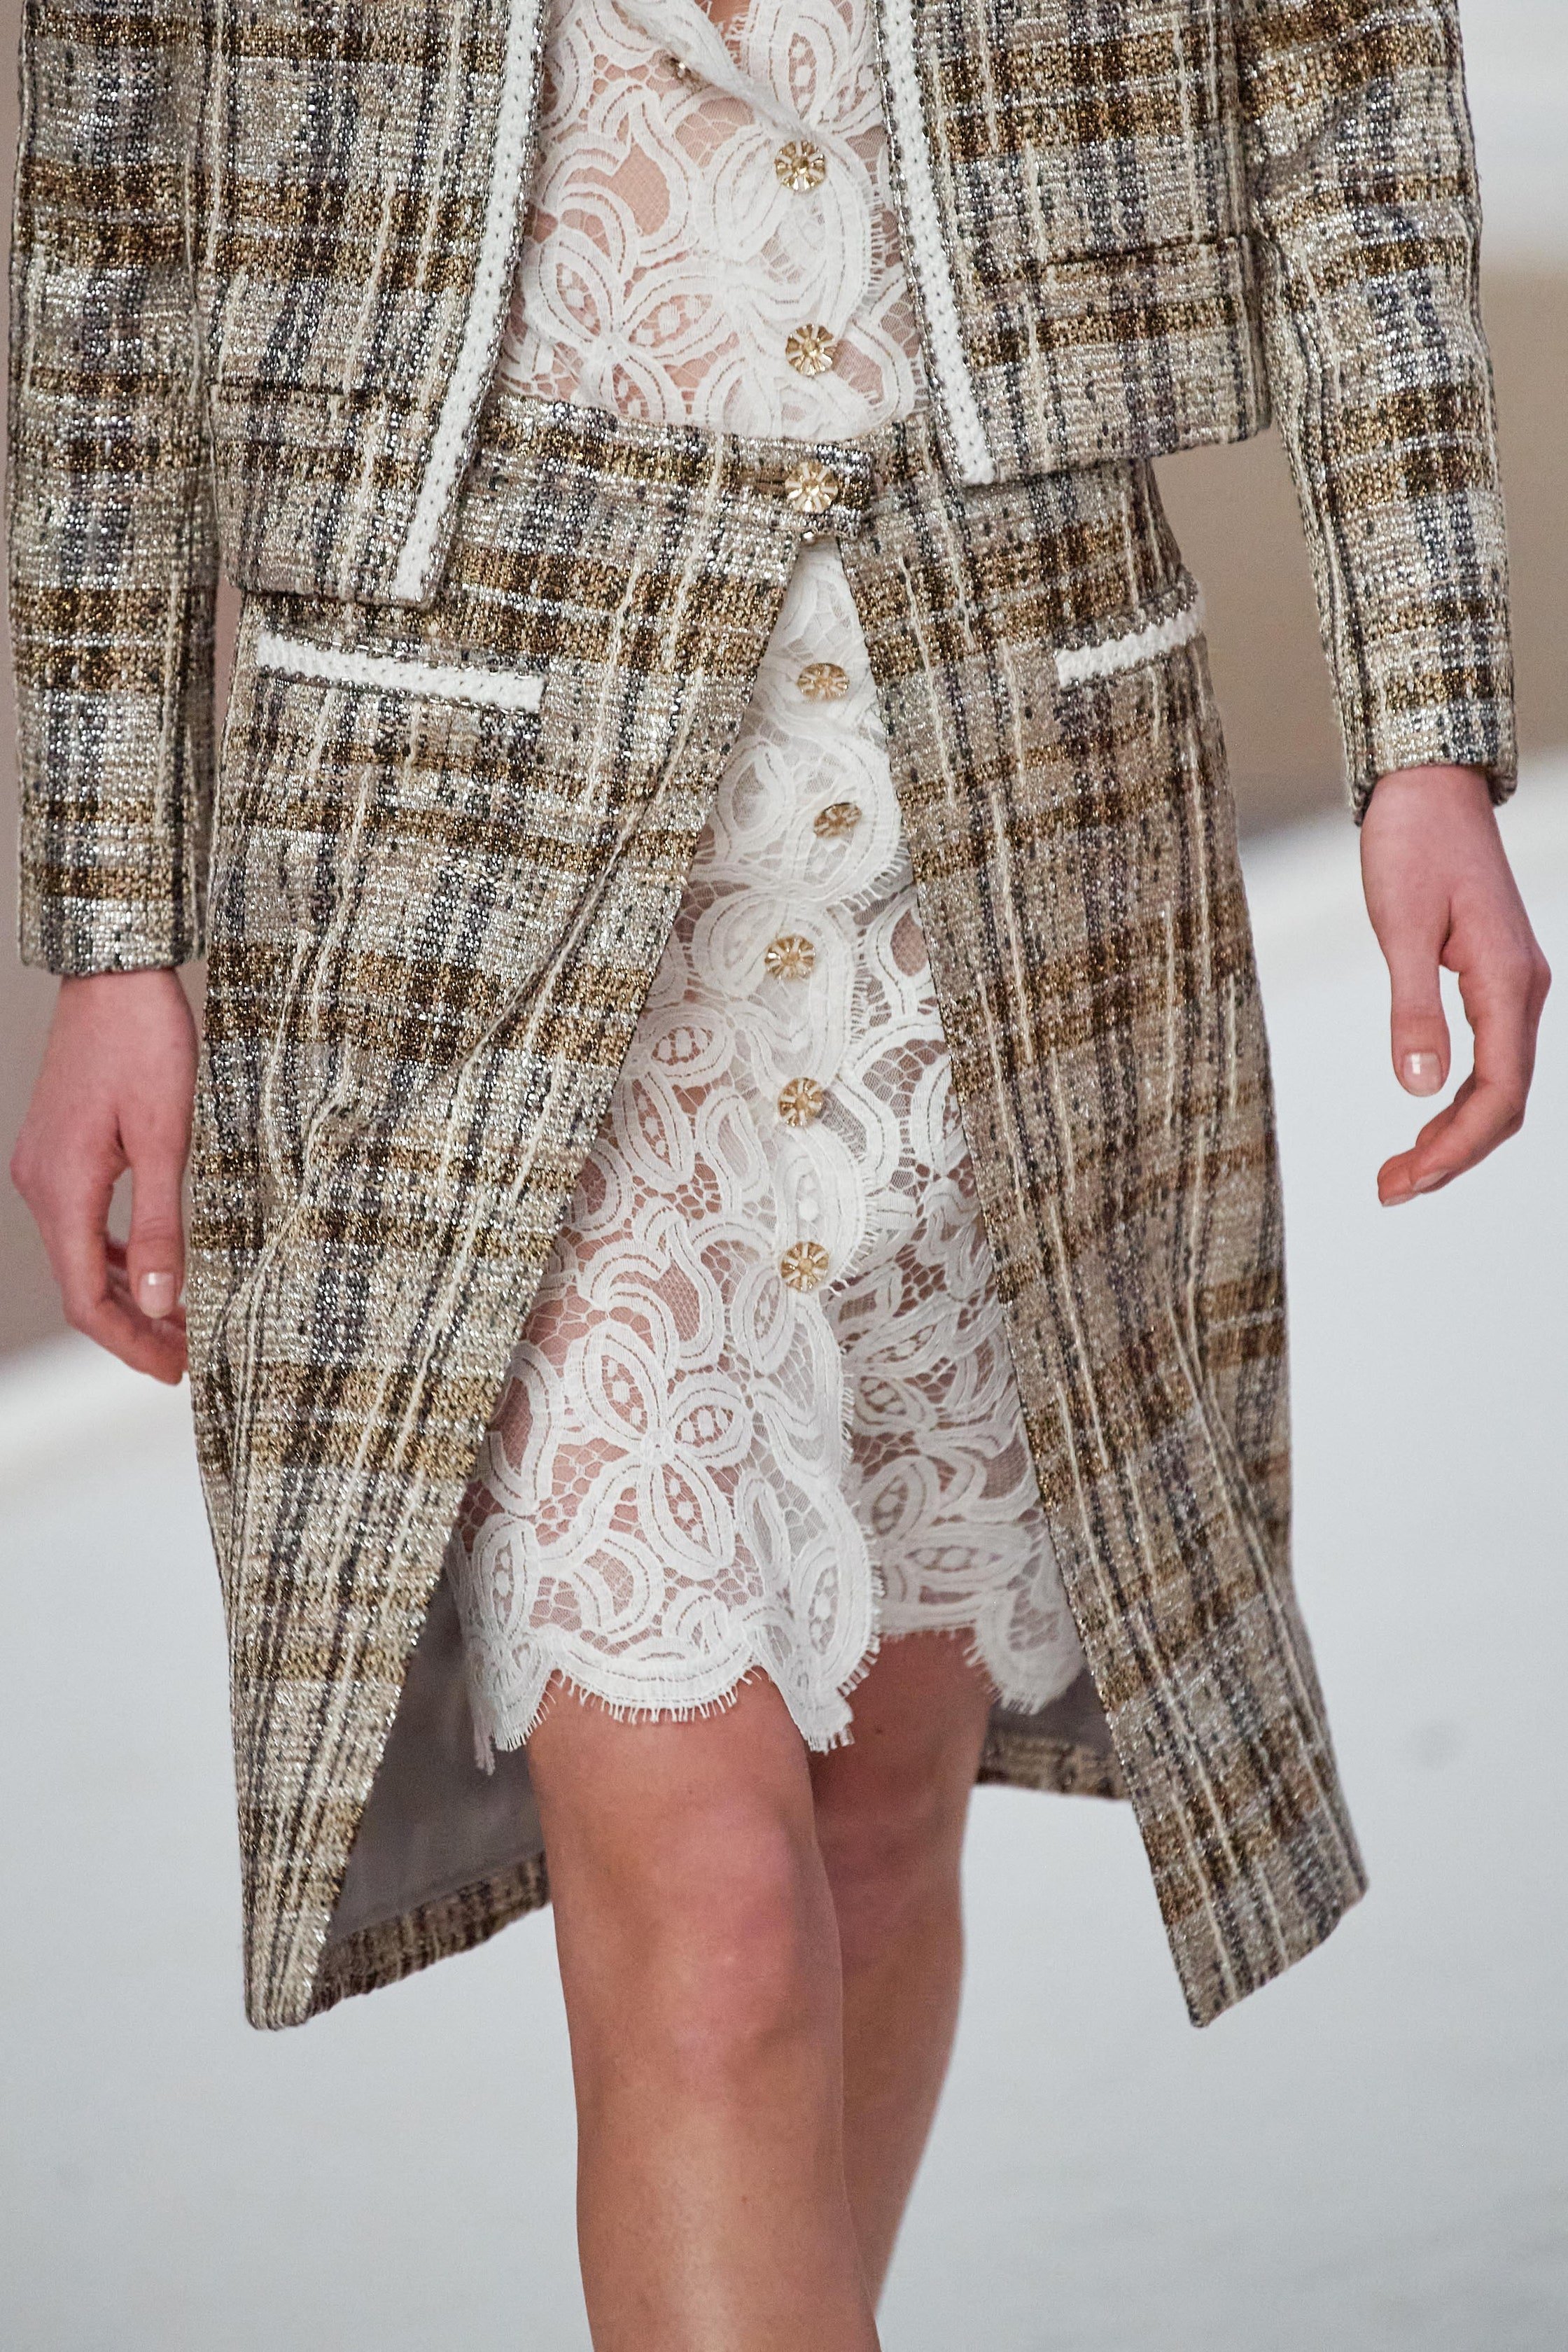 00056-Chanel-Couture-Spring-22-Paris-DETAILS-credit-Alessandro-Viero-Gorunway.jpeg